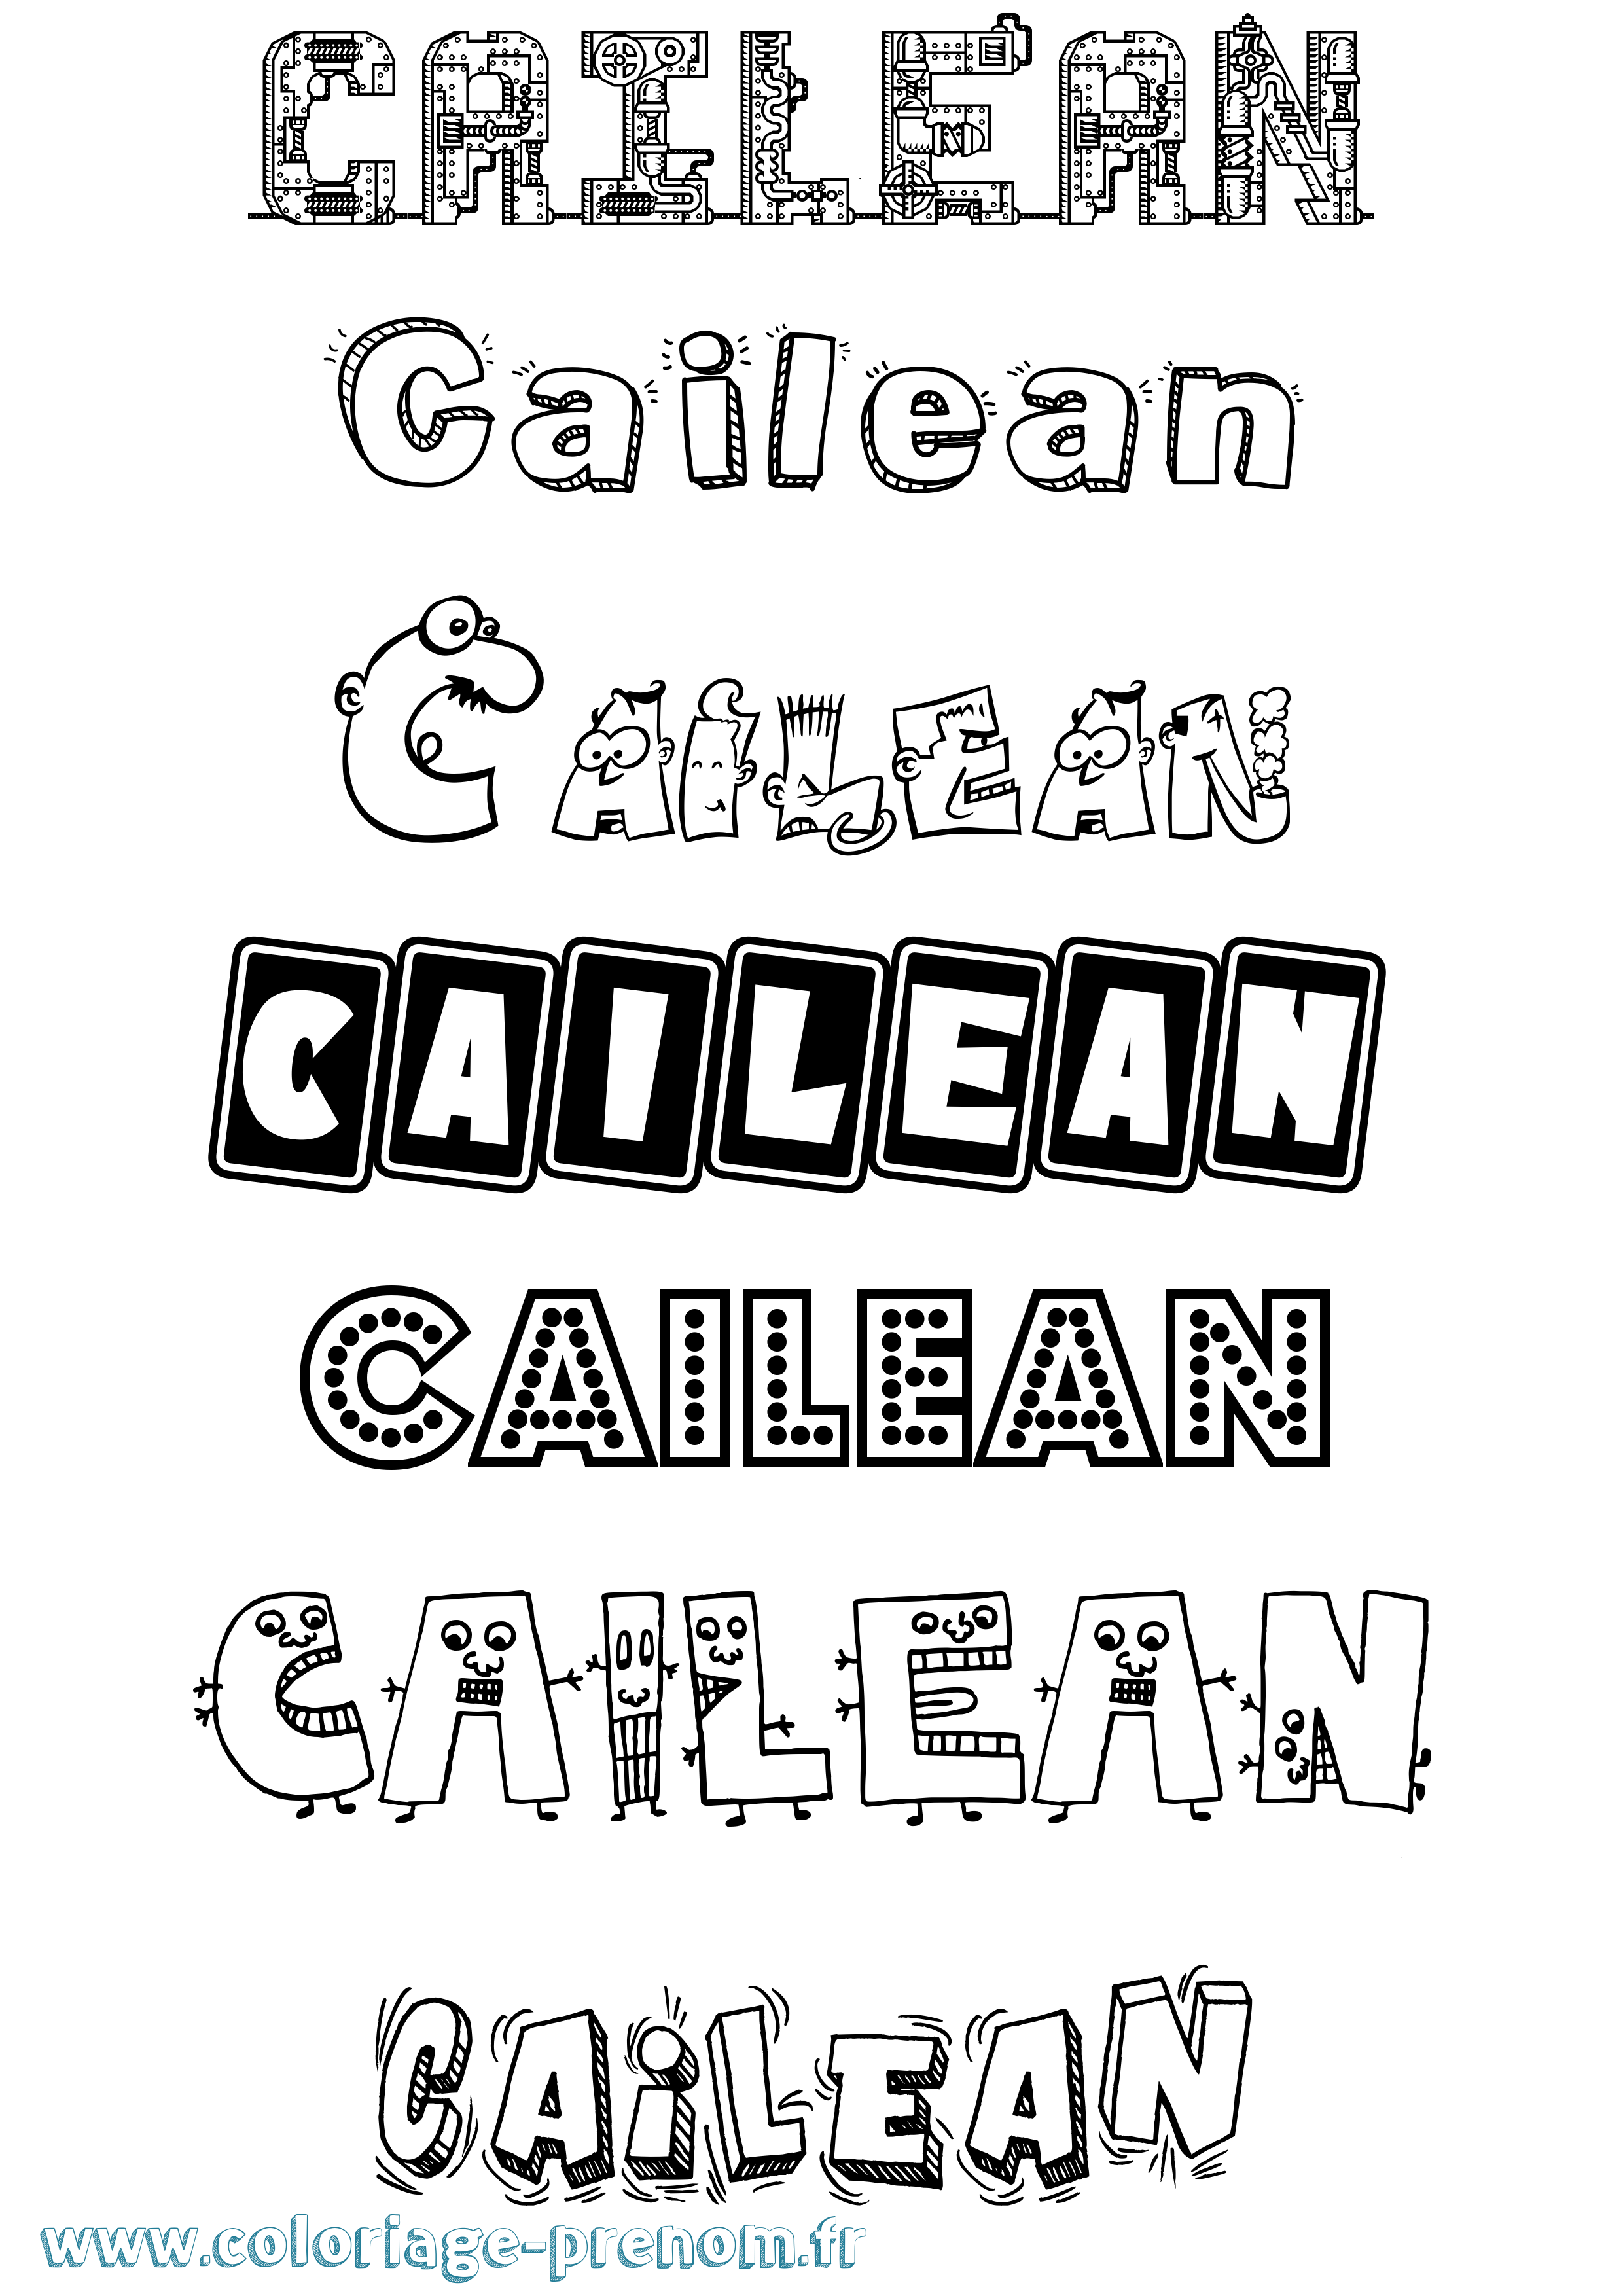 Coloriage prénom Cailean Fun